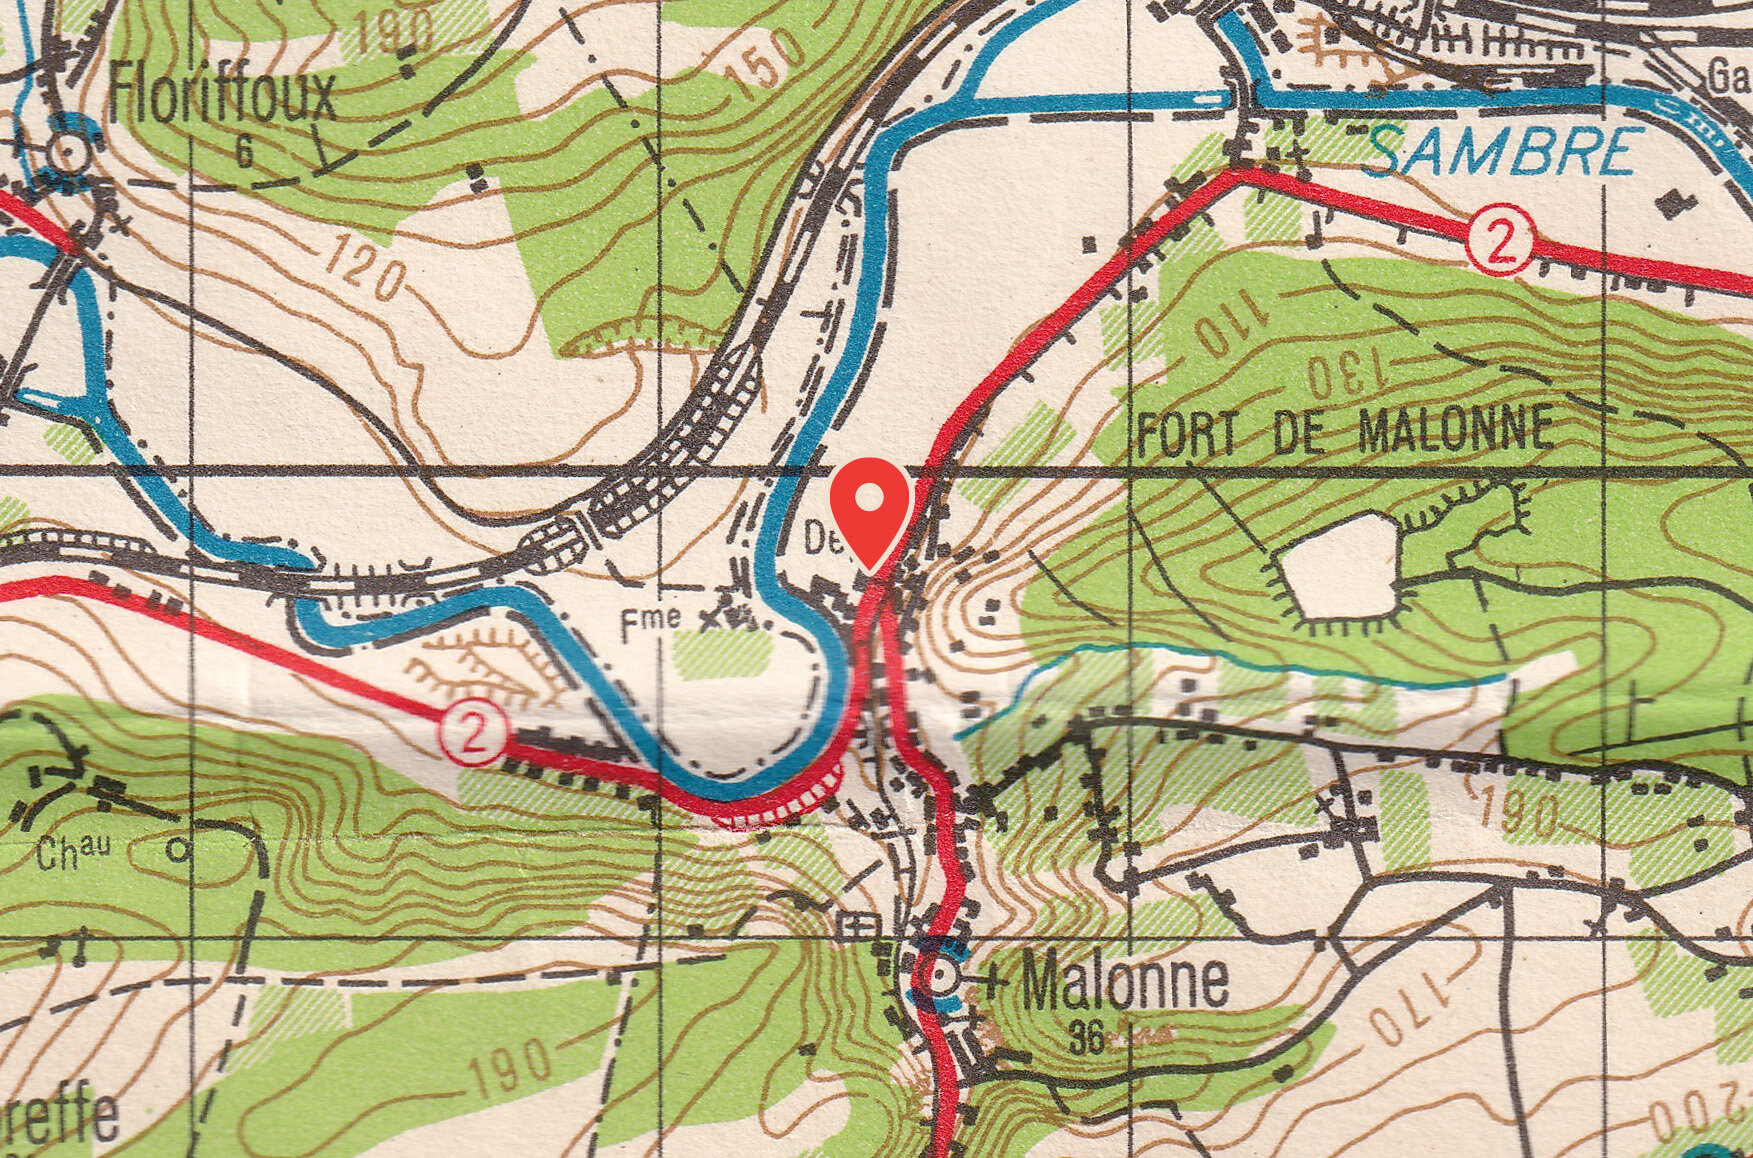 Route du Sambre, 1936 (Ellipsoïde van Delambre)